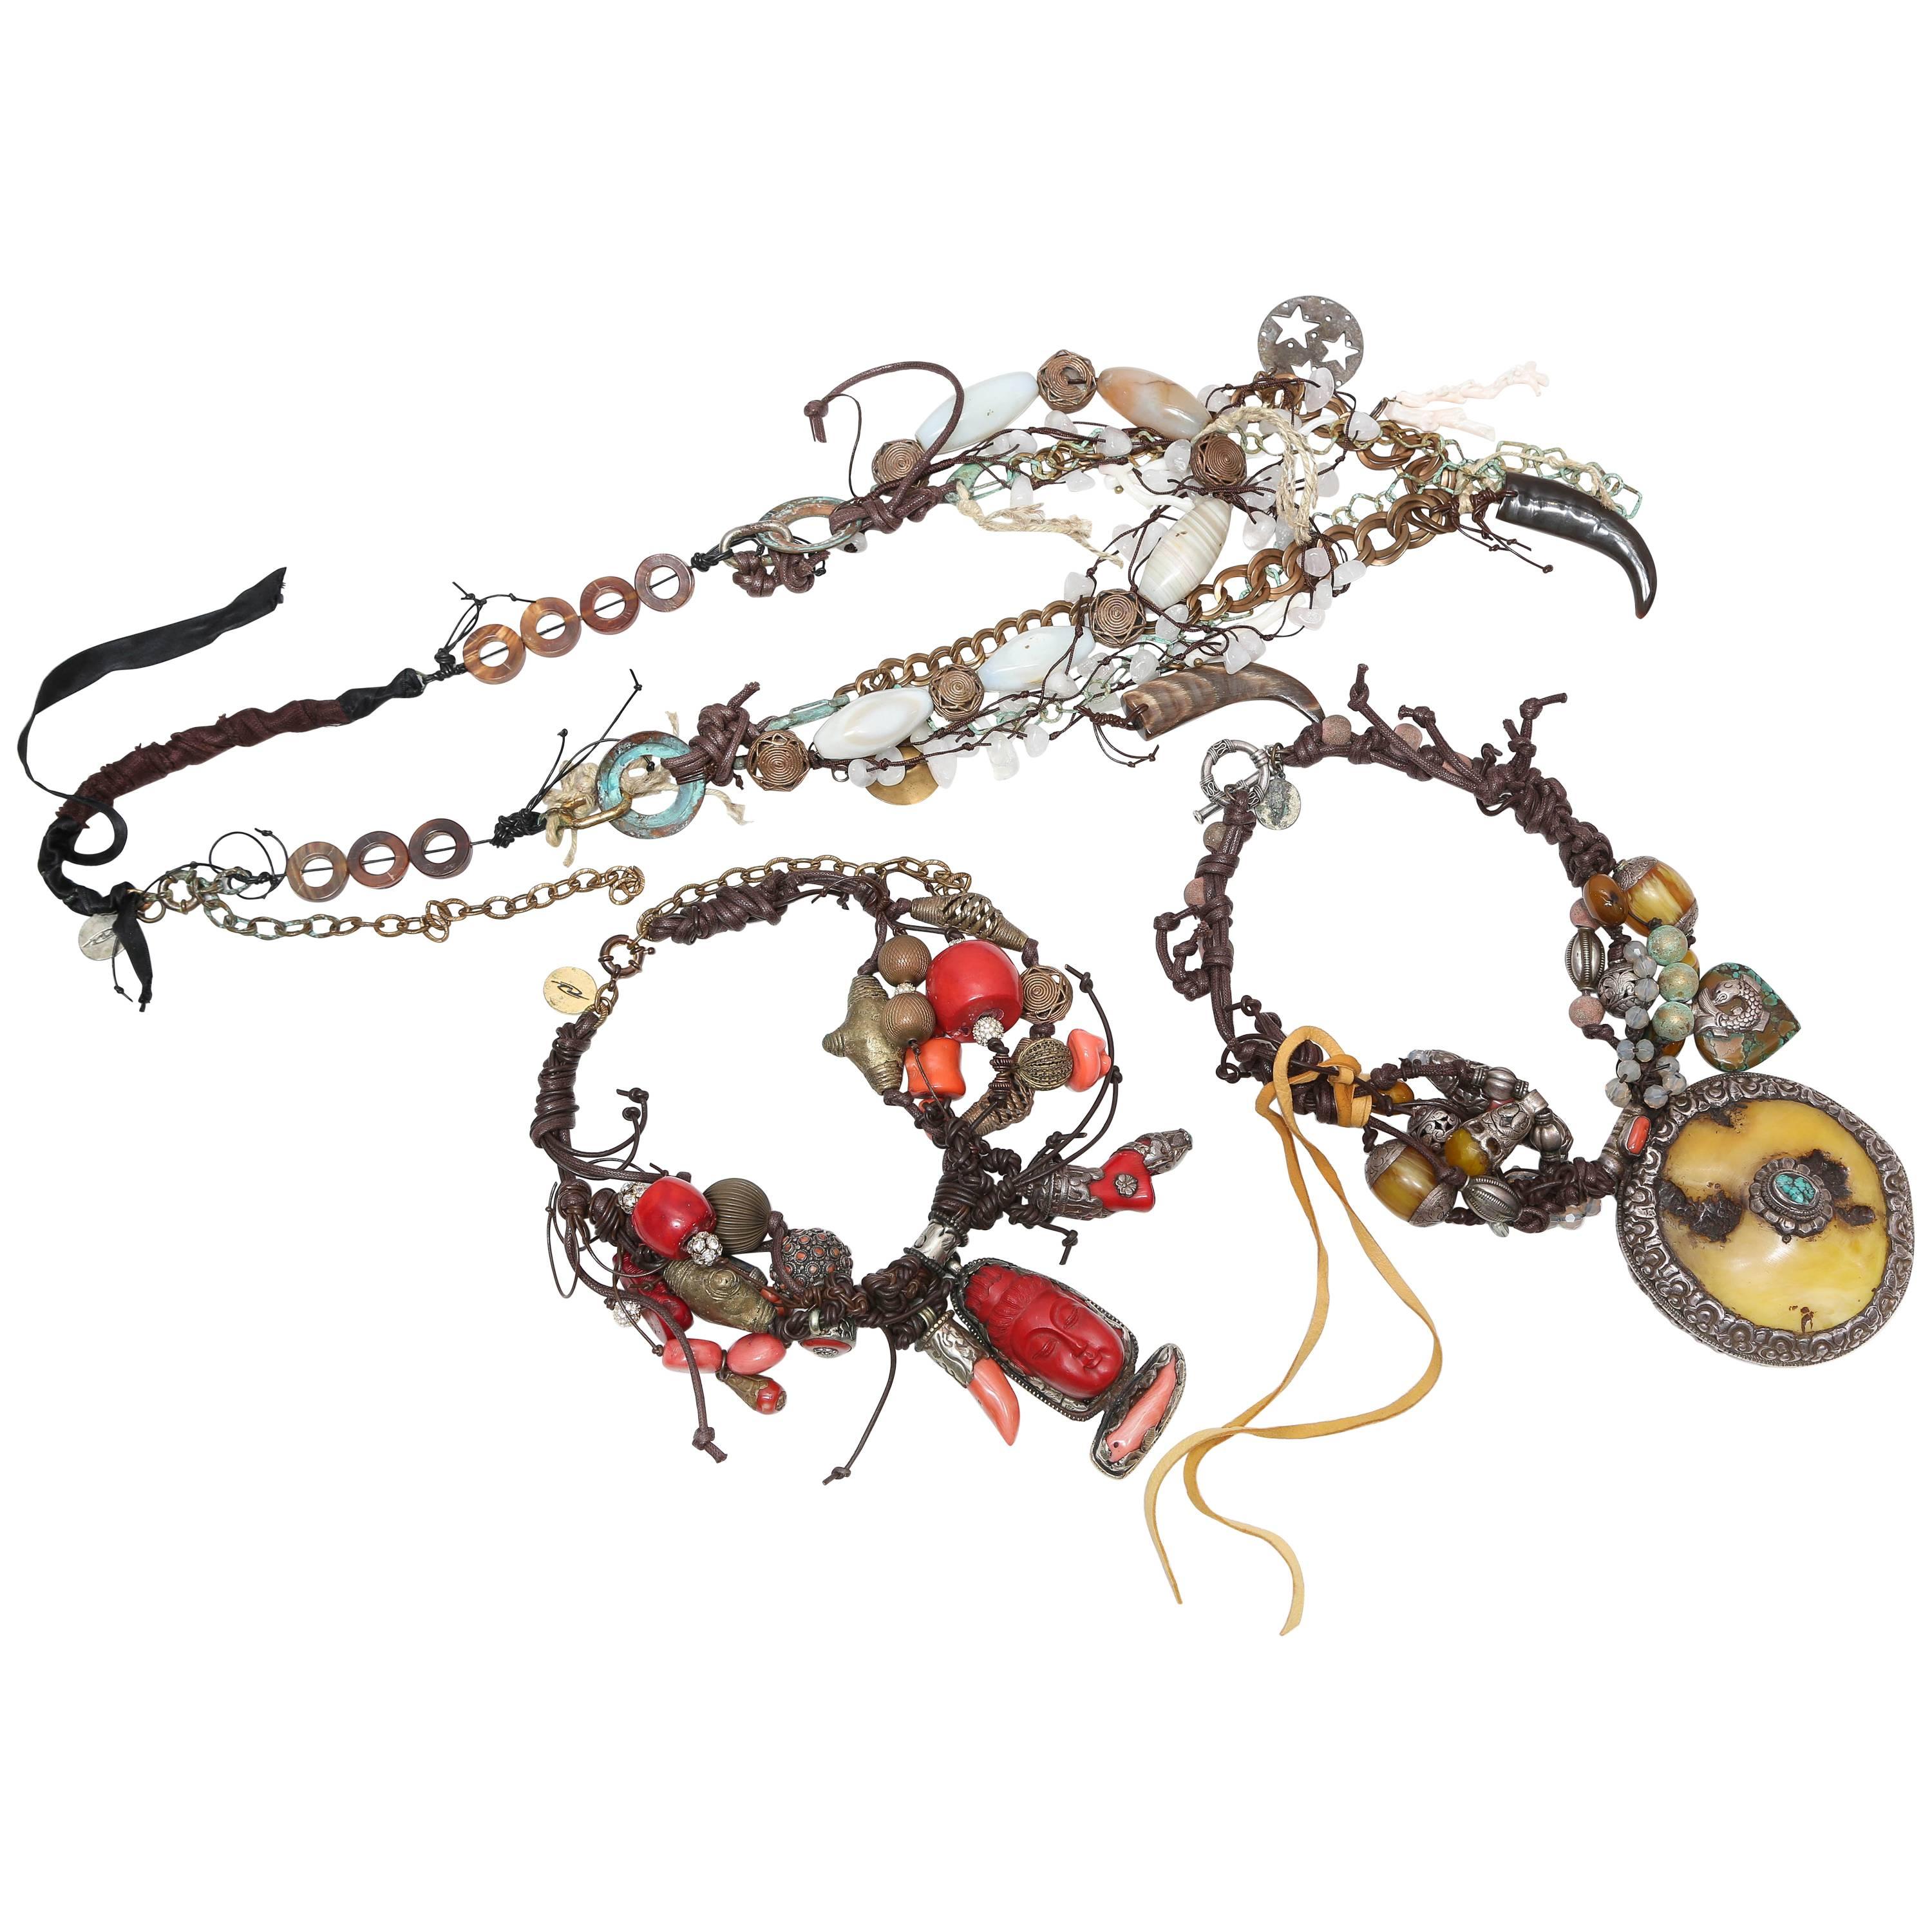 Marzia Z Jewelry Designer, Italy, Unique Necklaces, with Ethnic, Antique Symbols